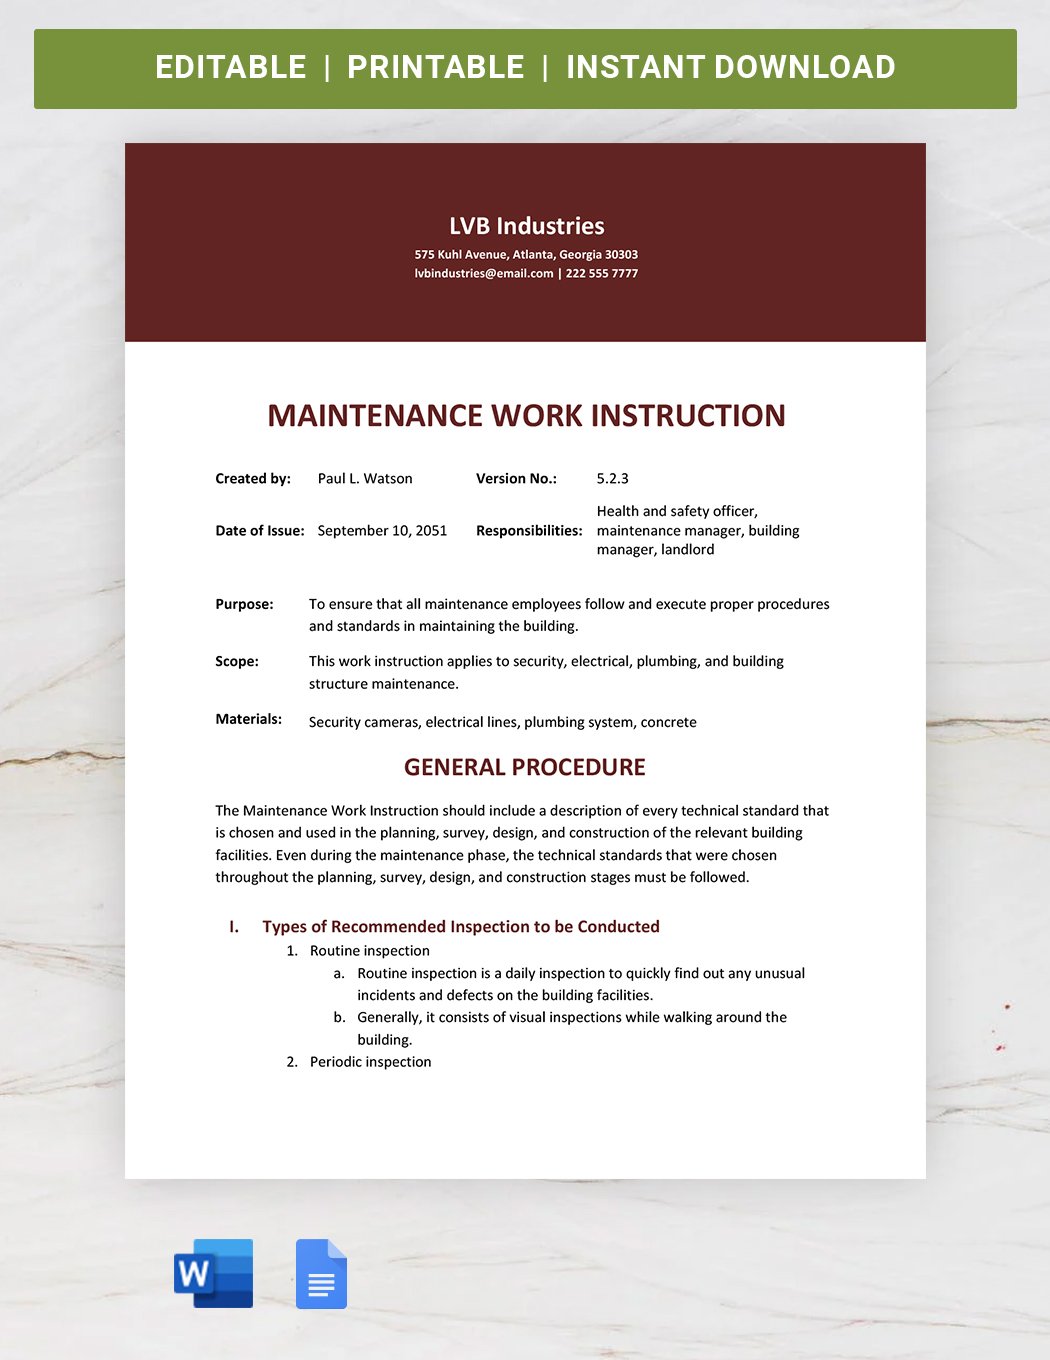 Maintenance Work Instruction Template in Word, Google Docs